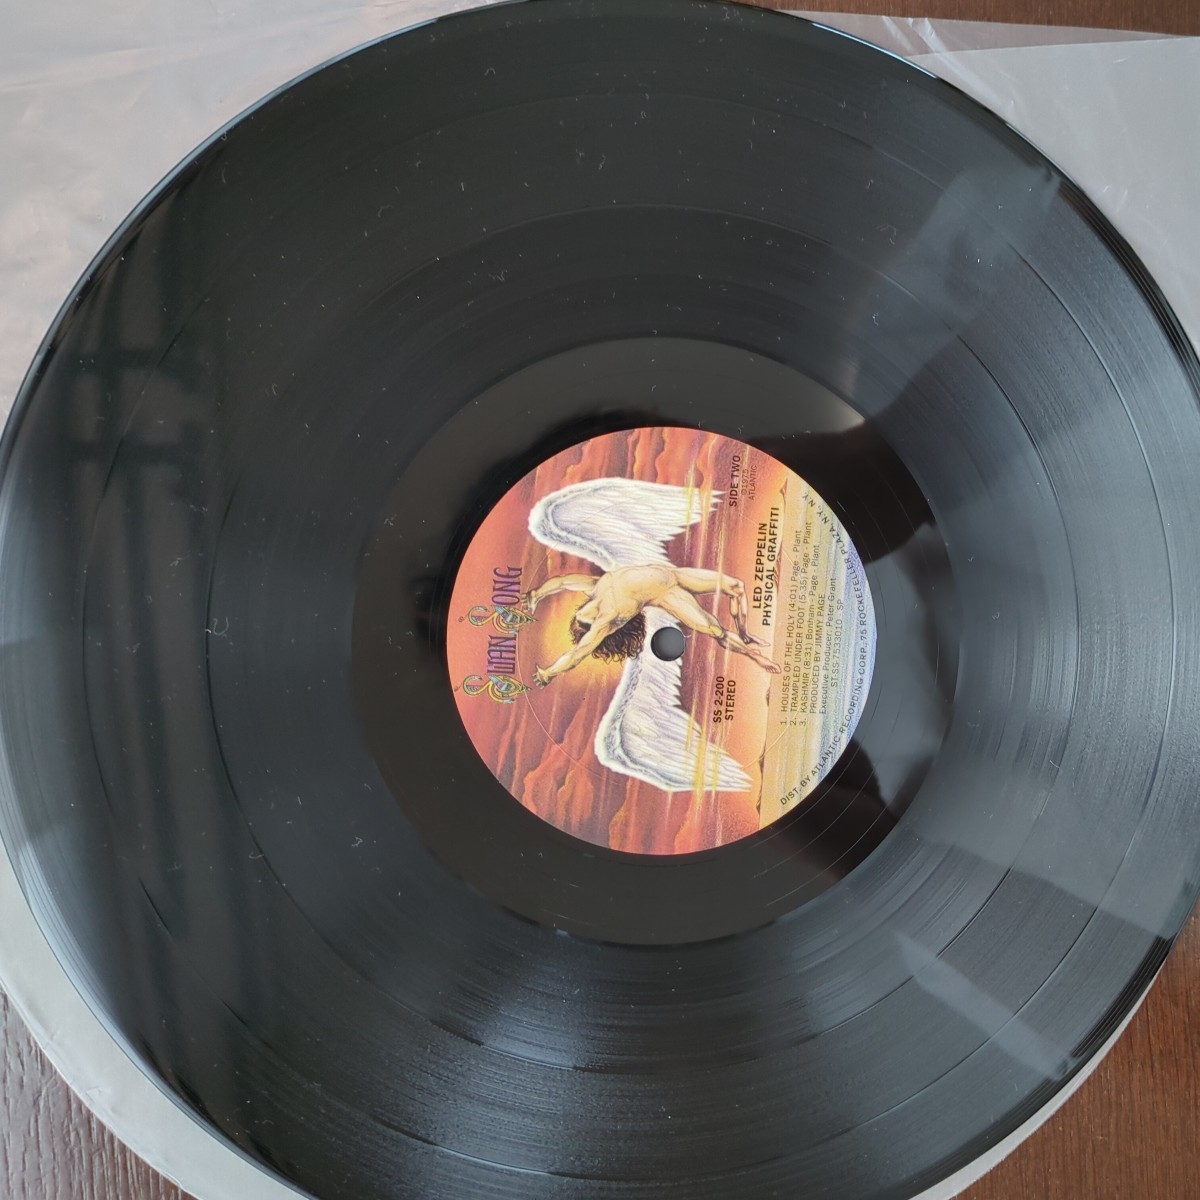 classic records led zeppelin physical graffiti レッド・ツェッペリン クラシック 200g Quiex-SVP recordレコード LP アナログ vinyl_画像10